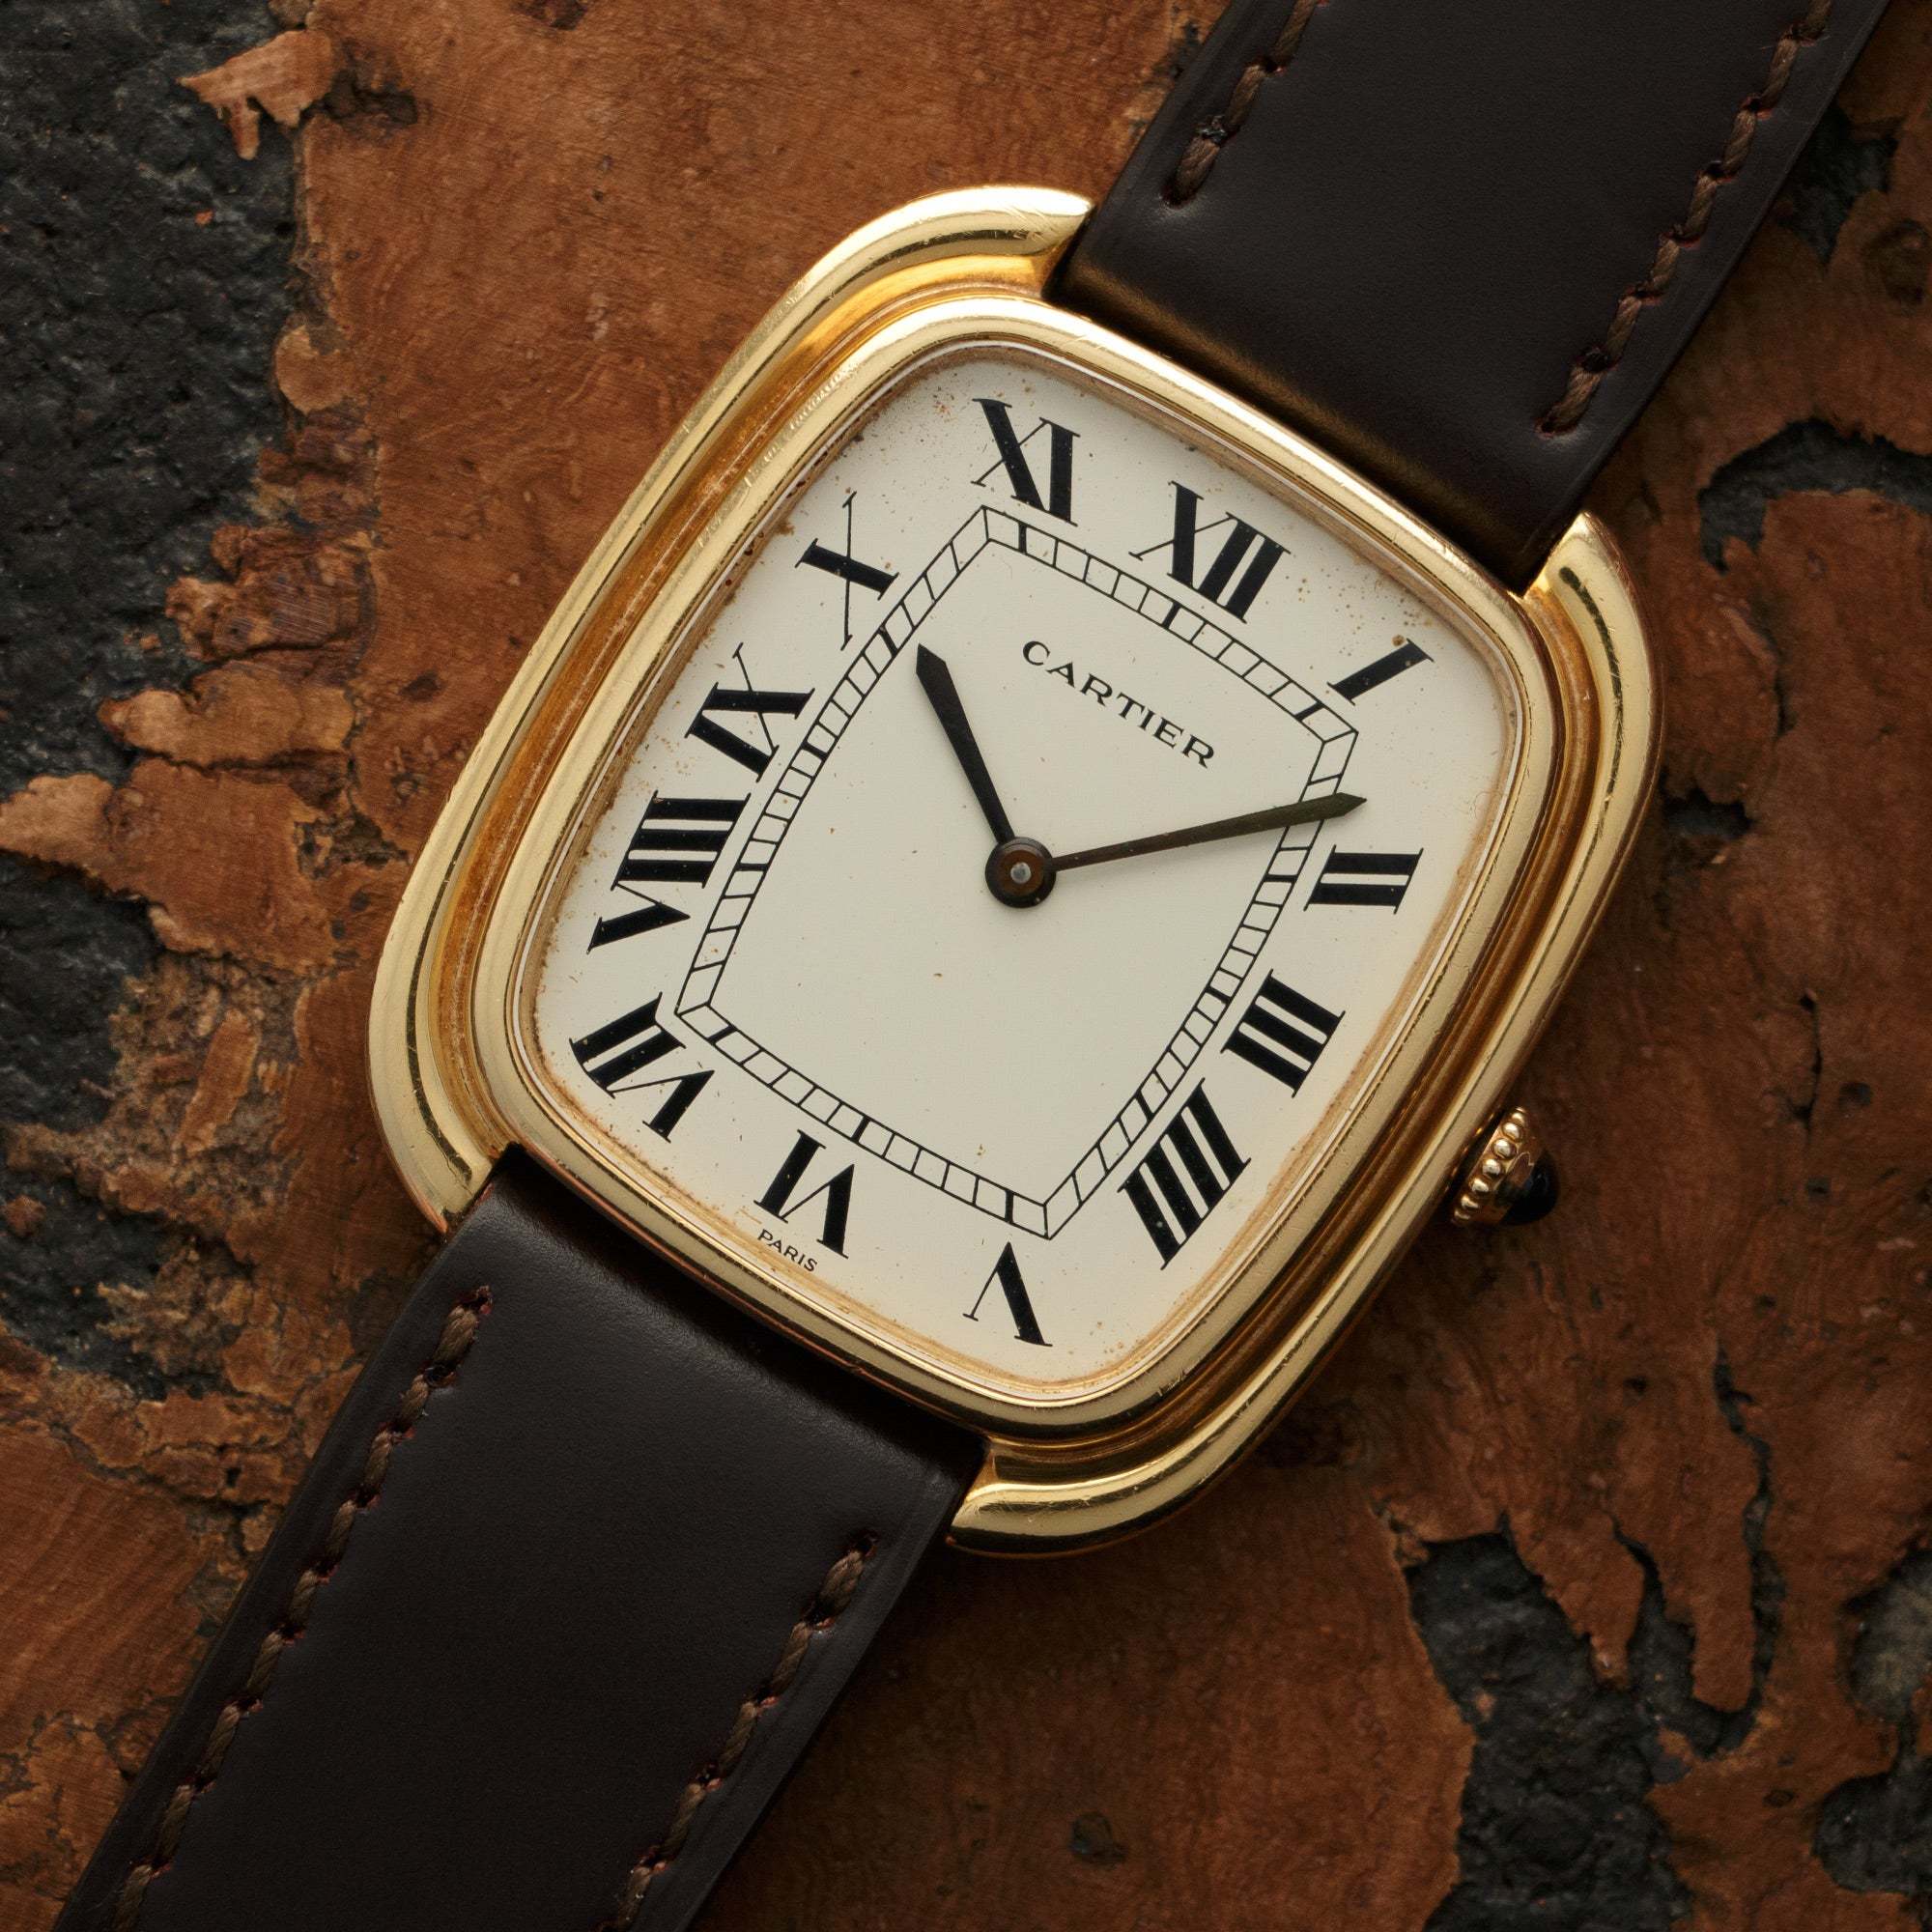 Cartier - Cartier Yellow Gold Jumbo Tank Gondole Watch - The Keystone Watches